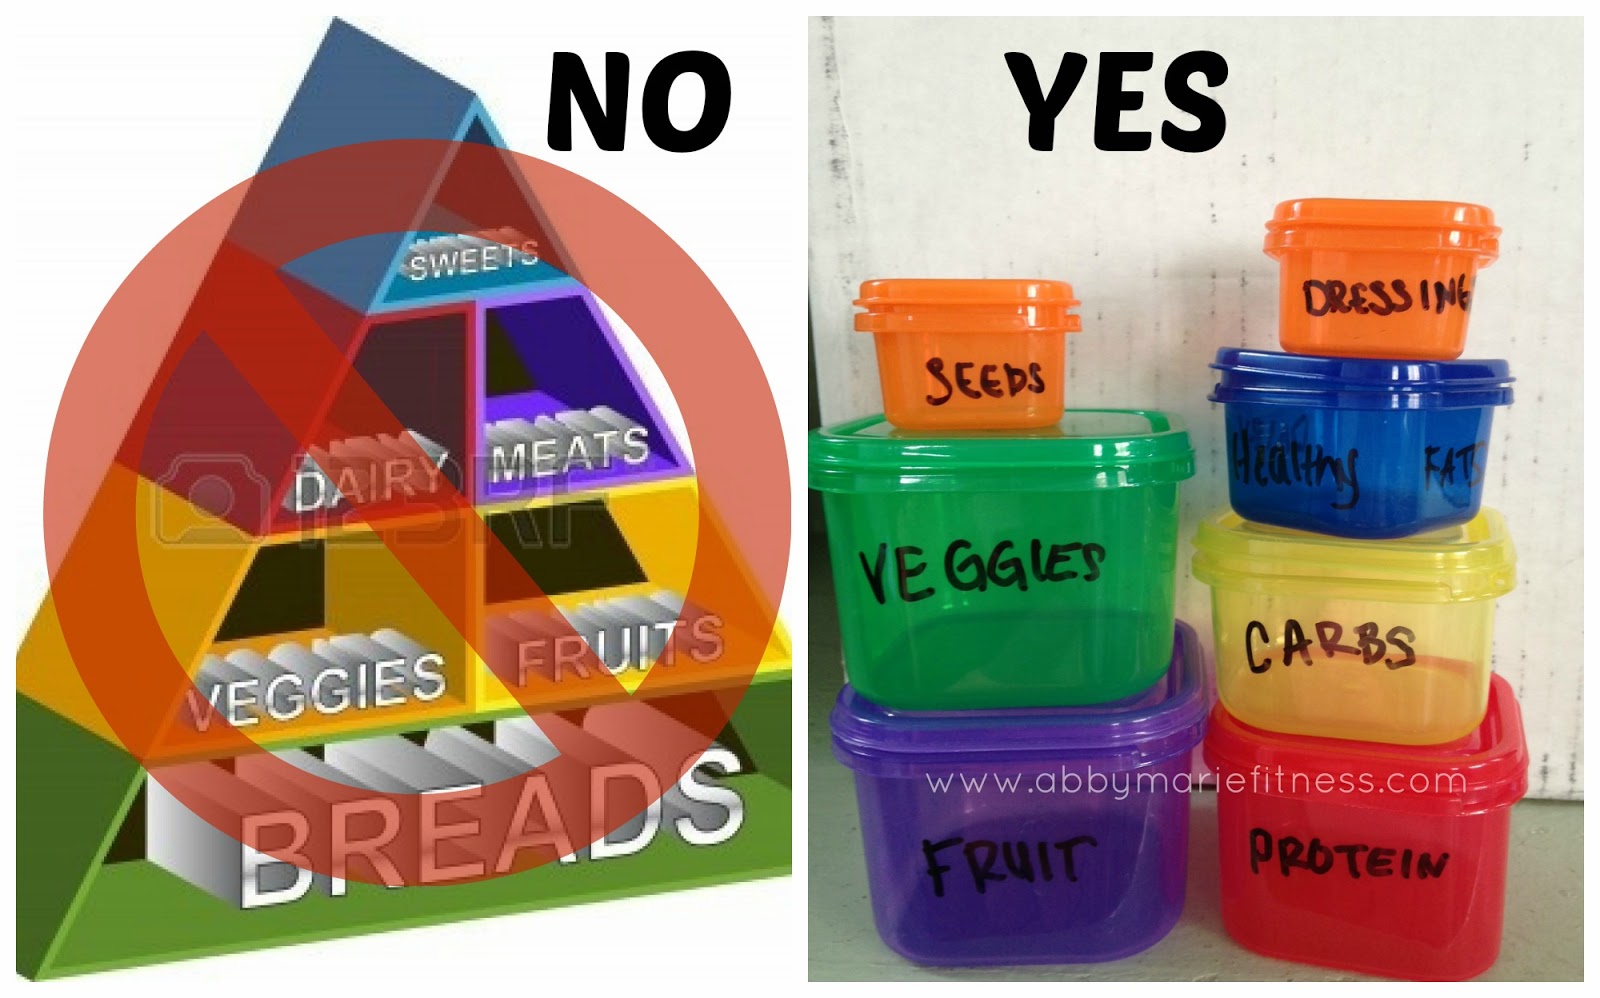 http://4.bp.blogspot.com/-8xyhnGZopiE/UyWebwWPjII/AAAAAAAAC1s/QR8L3WCaBxc/s1600/food+pyramid+vs.+containers.jpg